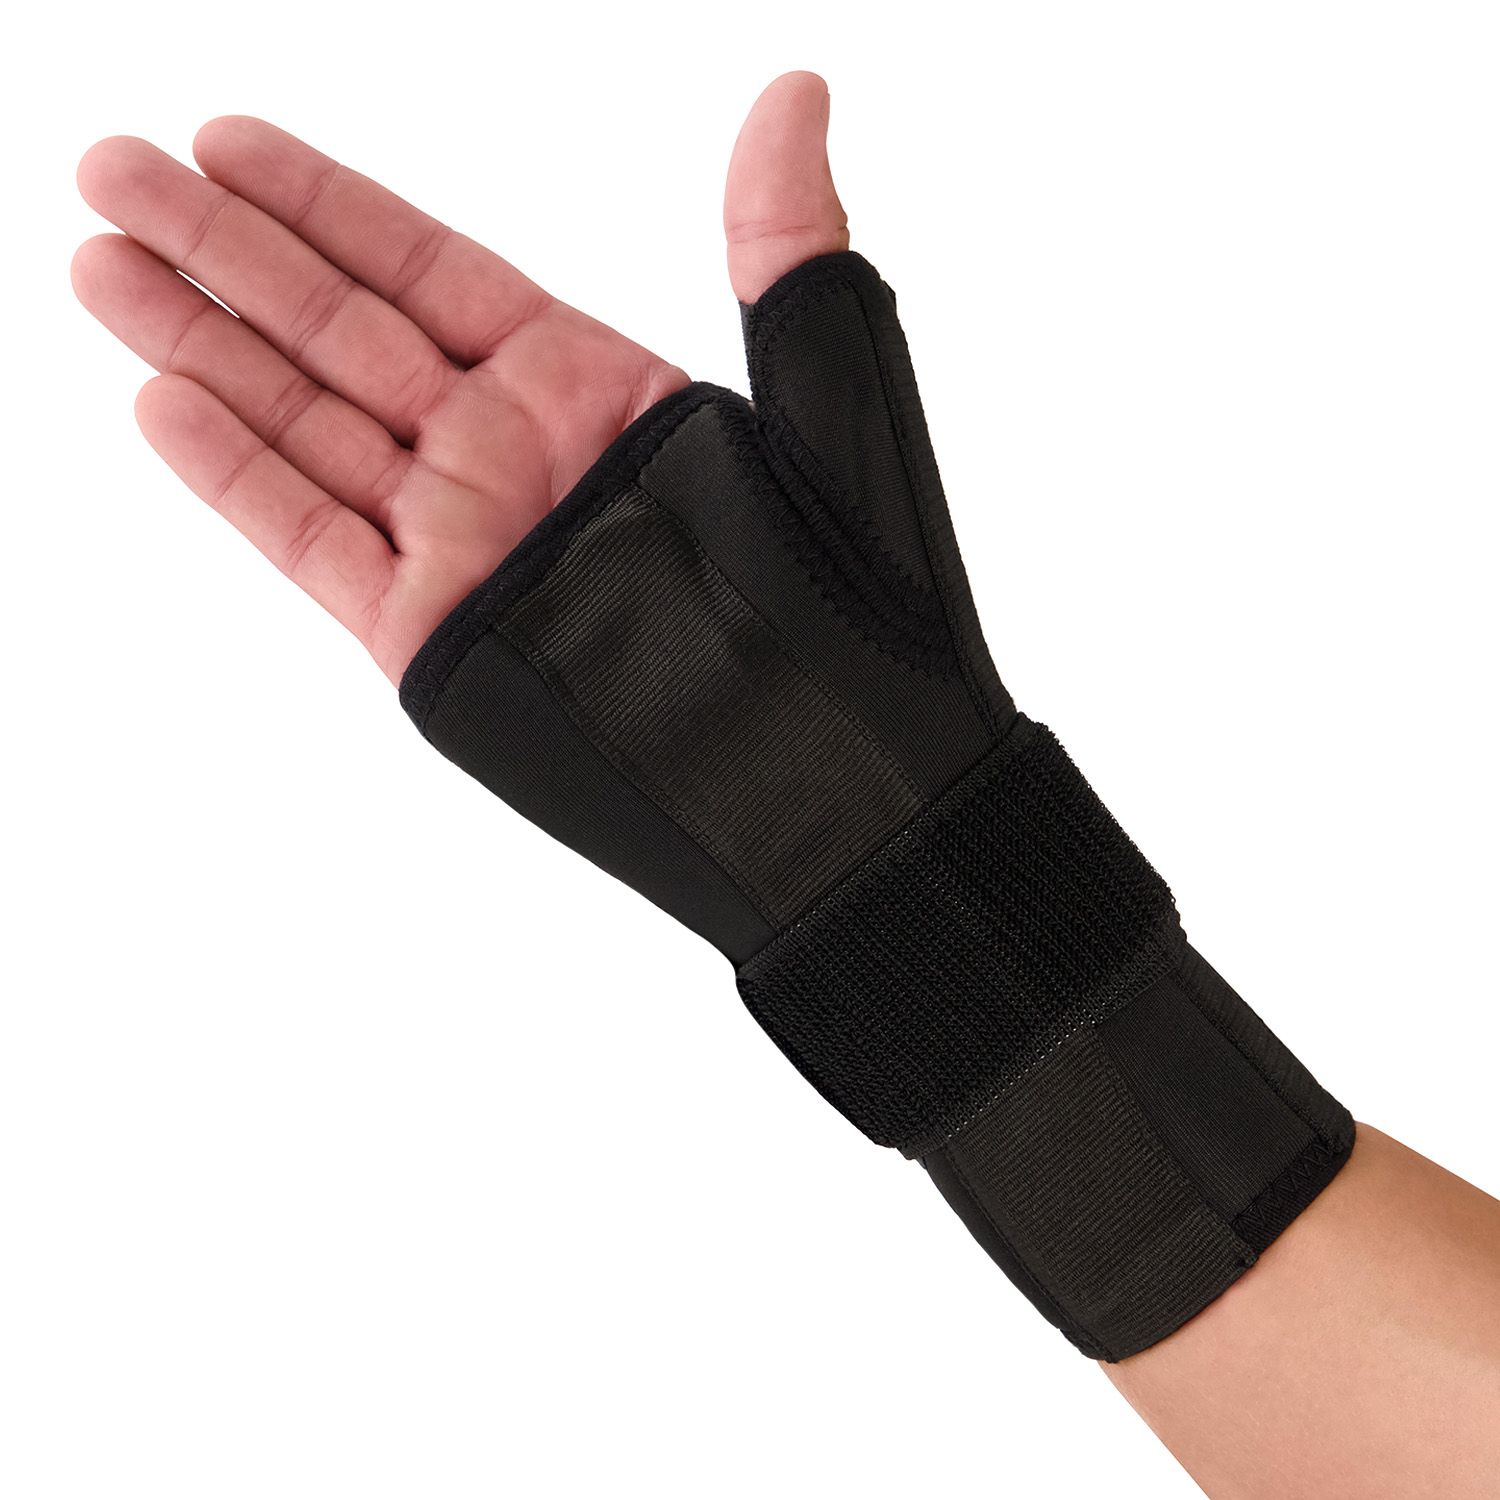 novamed thumb support wrist splint right hand top view